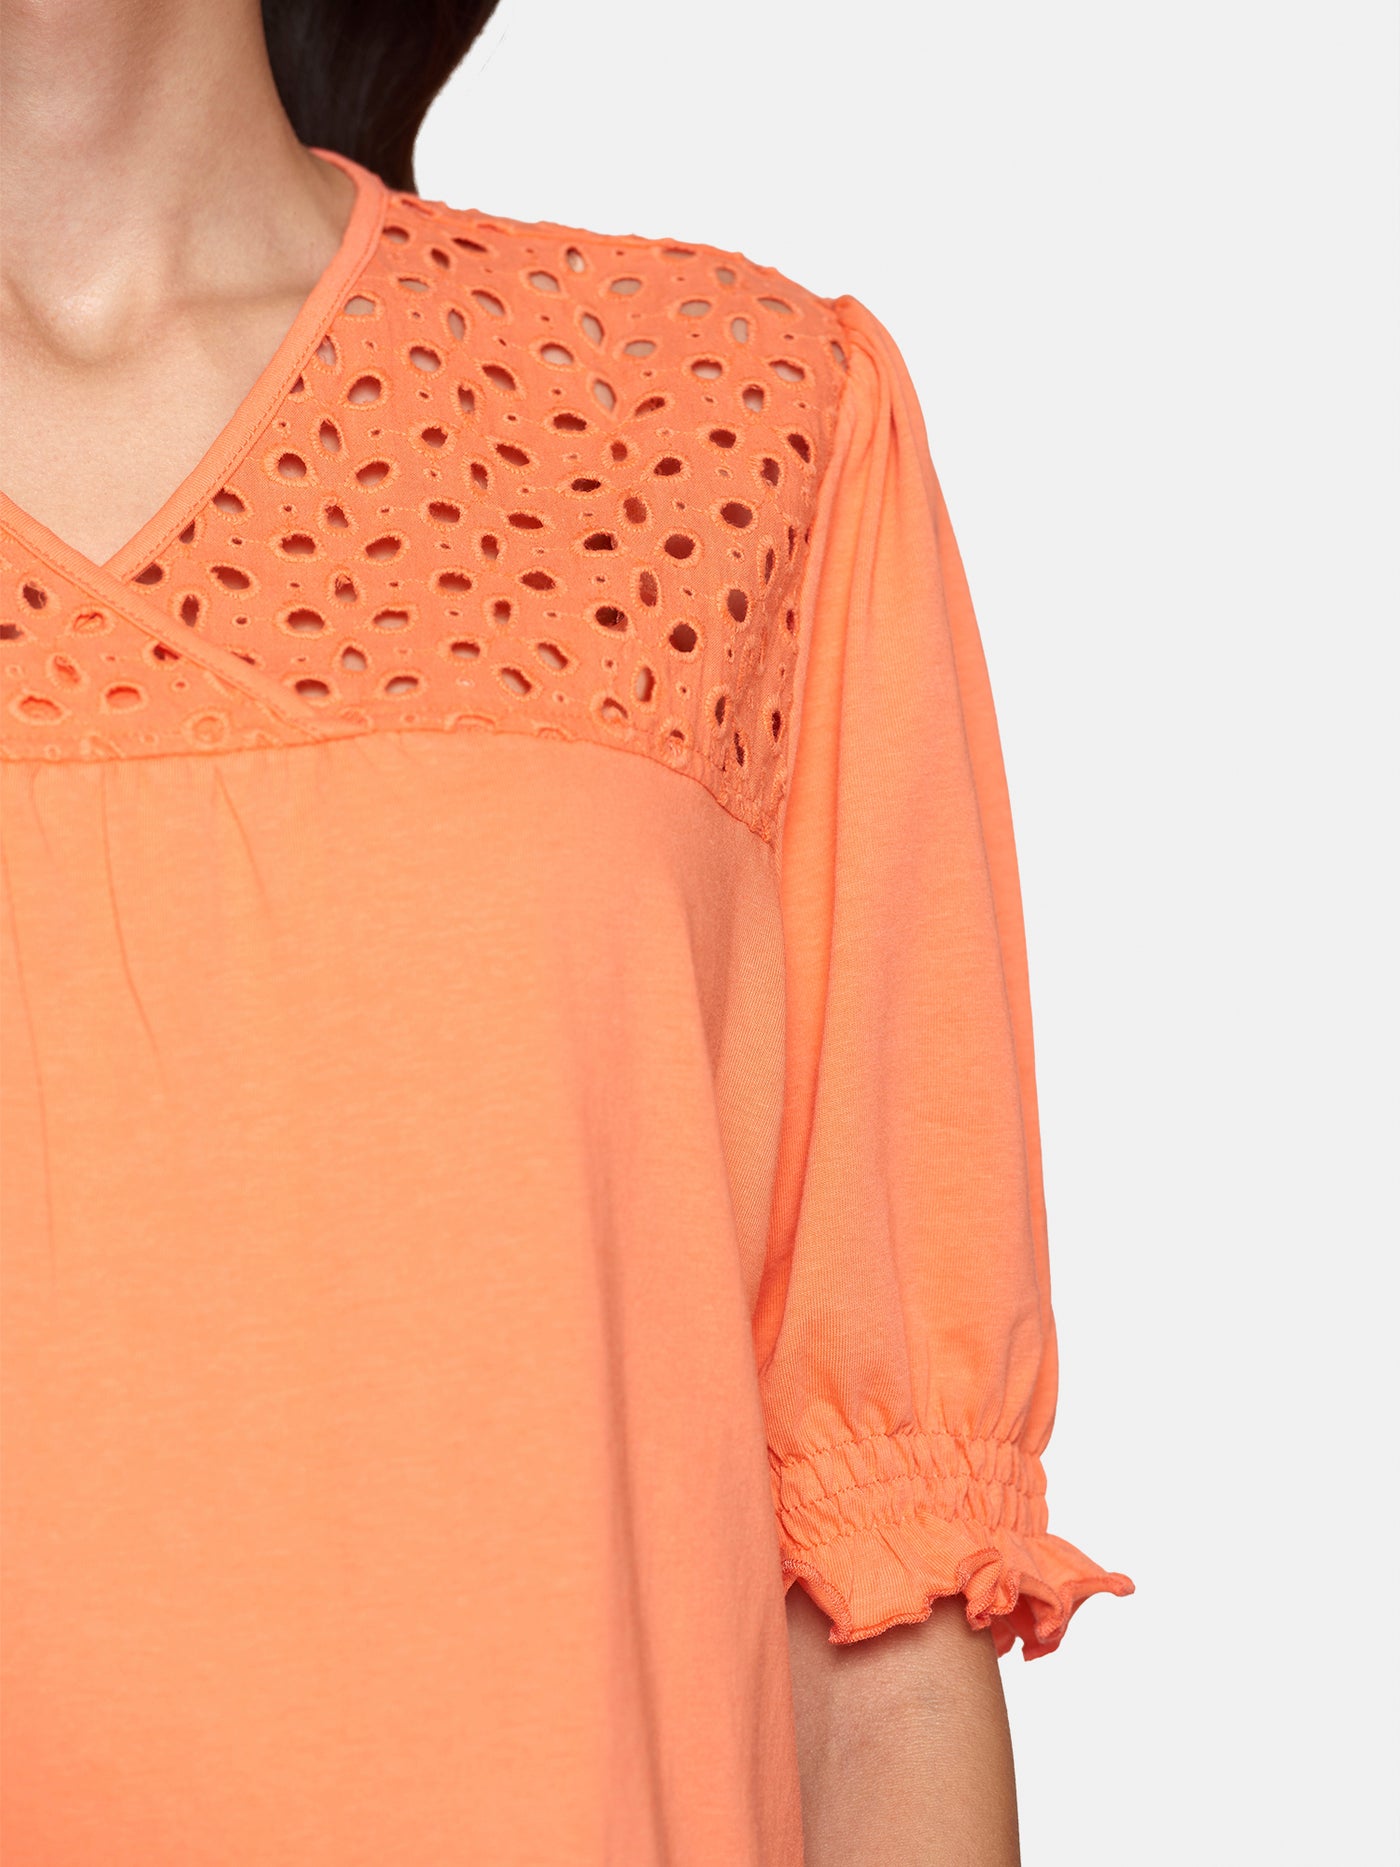 T-shirt - Orange